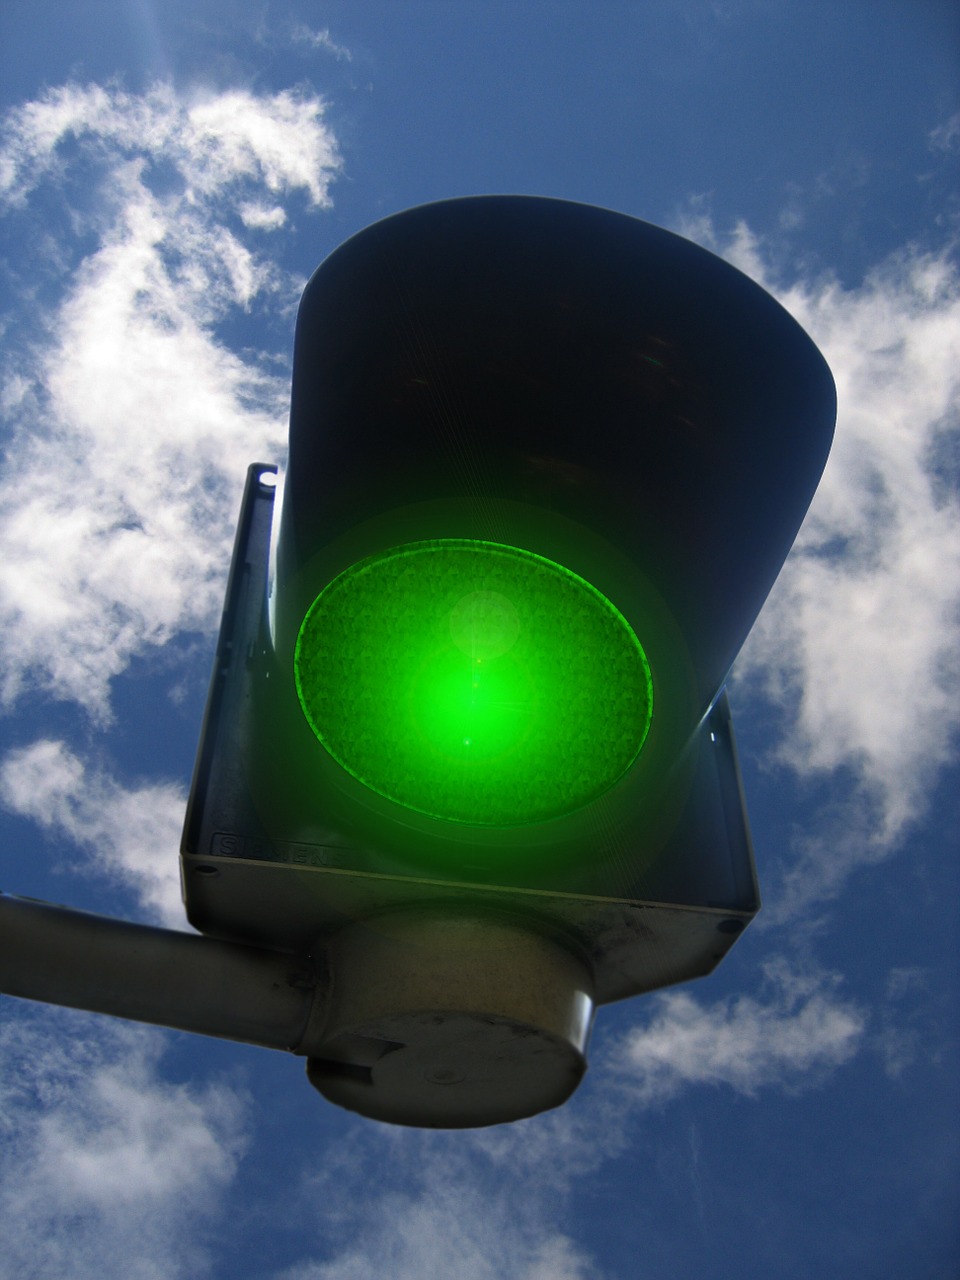 Green light or go image